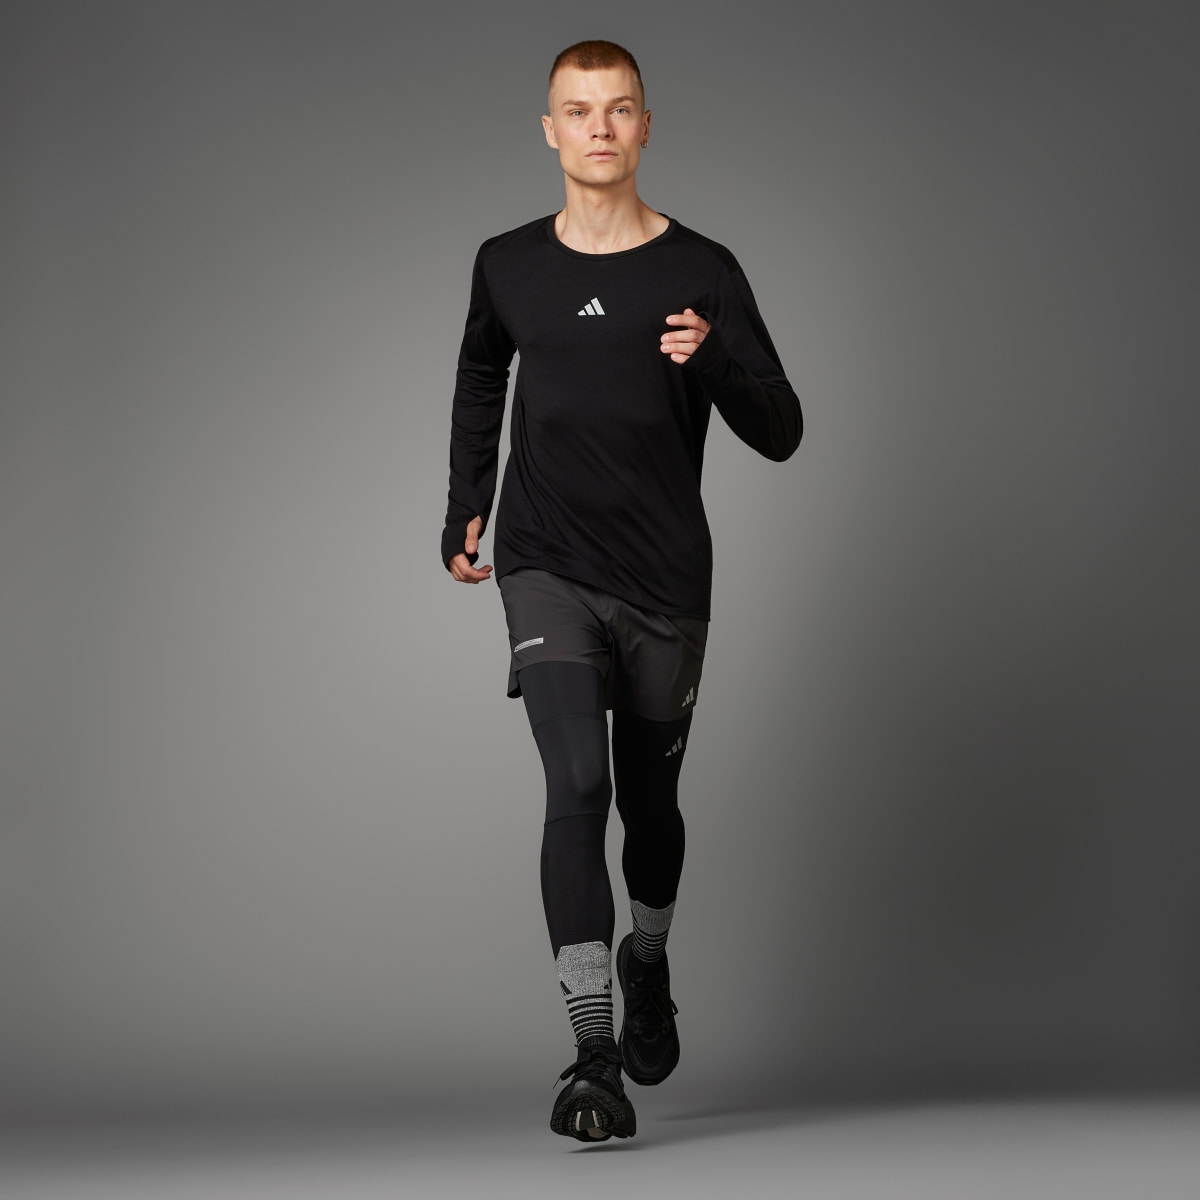 Adidas Camisola para Running Merino Conquer the Elements Ultimate. 10